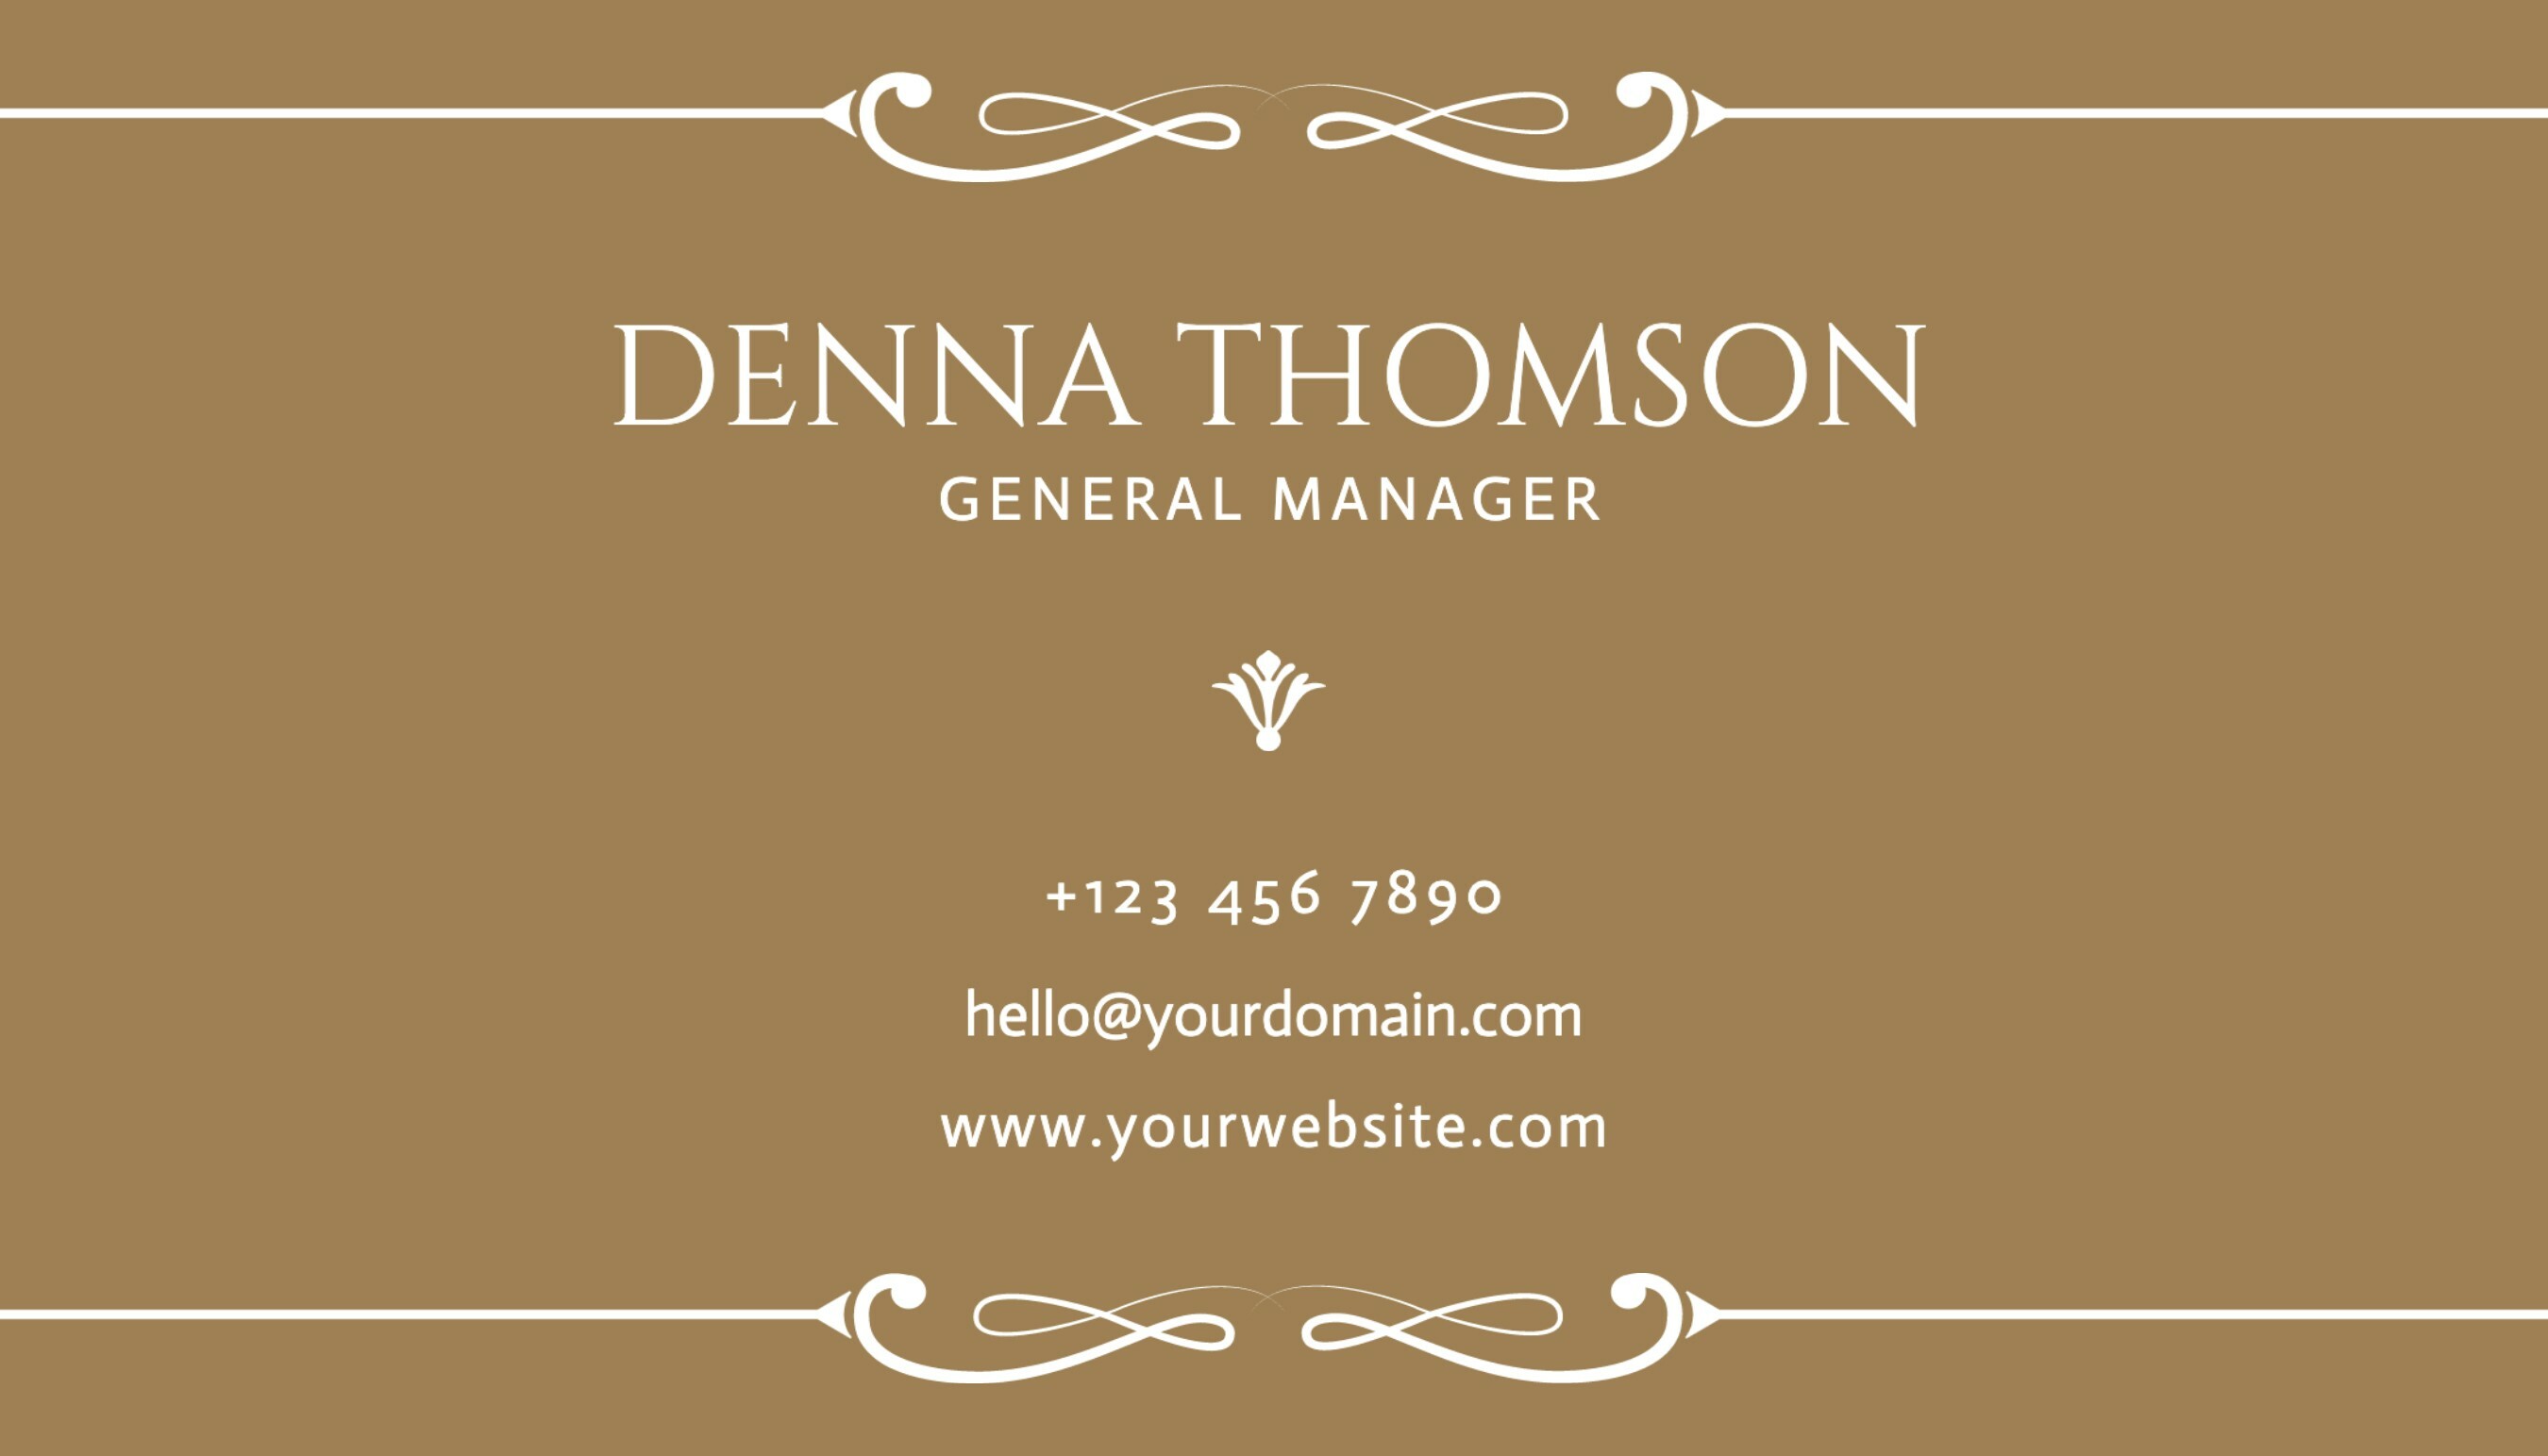 Gold Elegant General Manager Business Card template